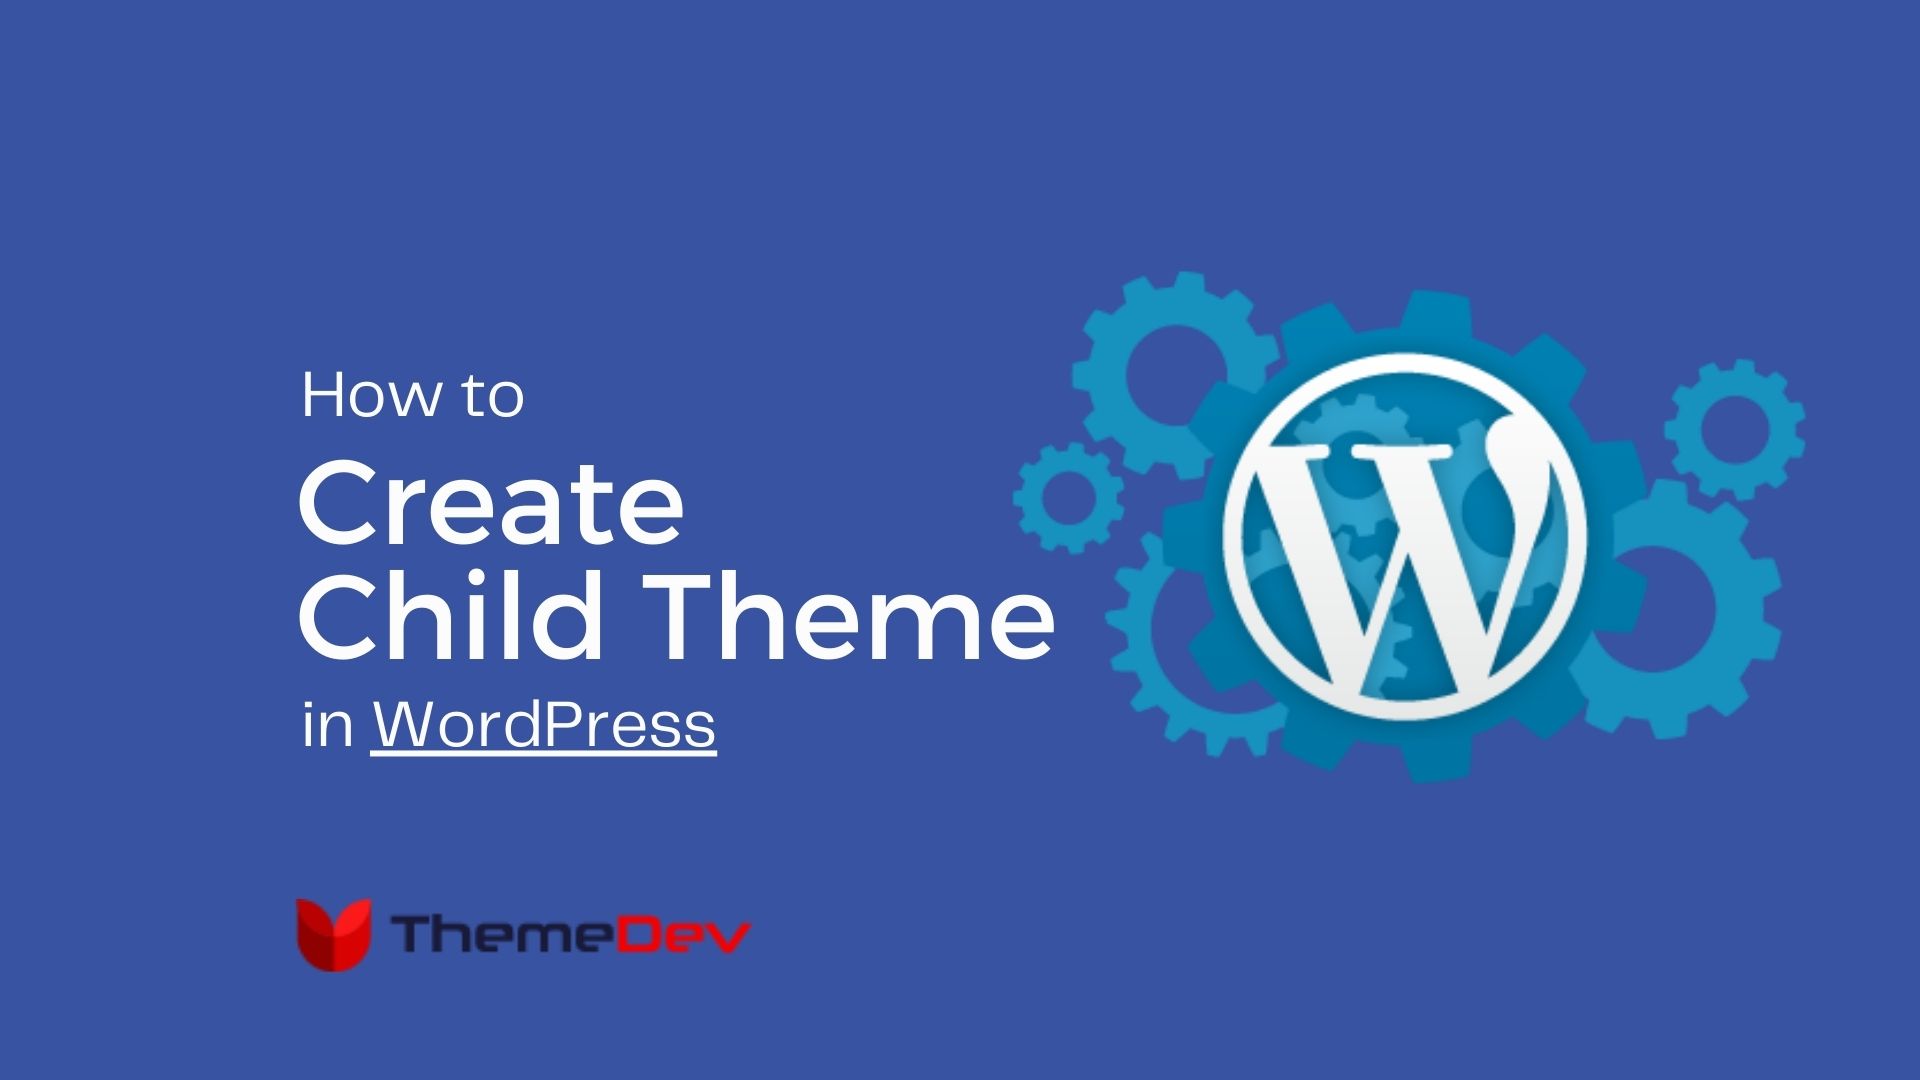 How to Create Child Theme in WordPress